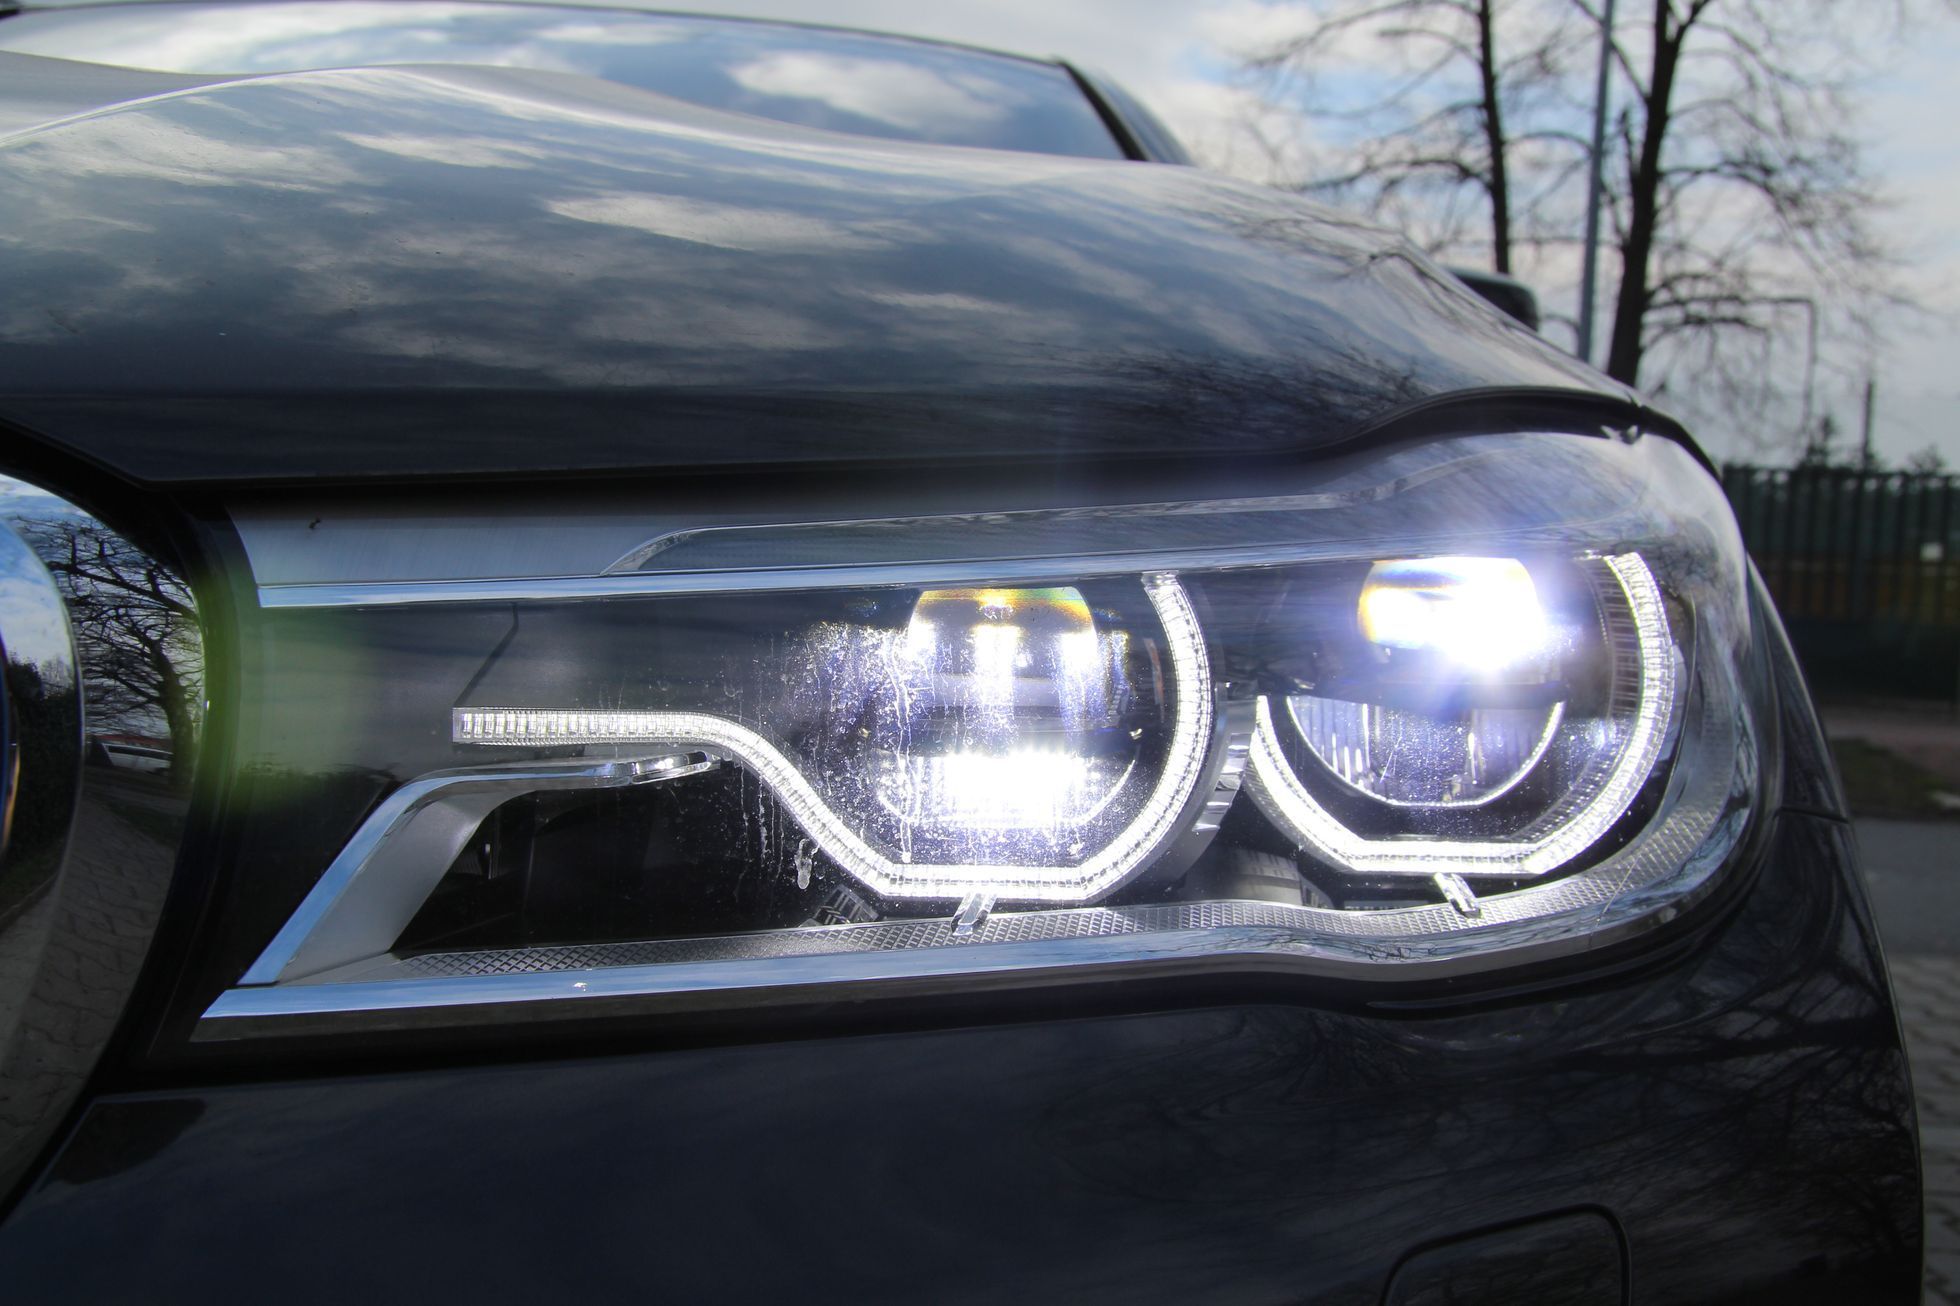 BMW Laserlight